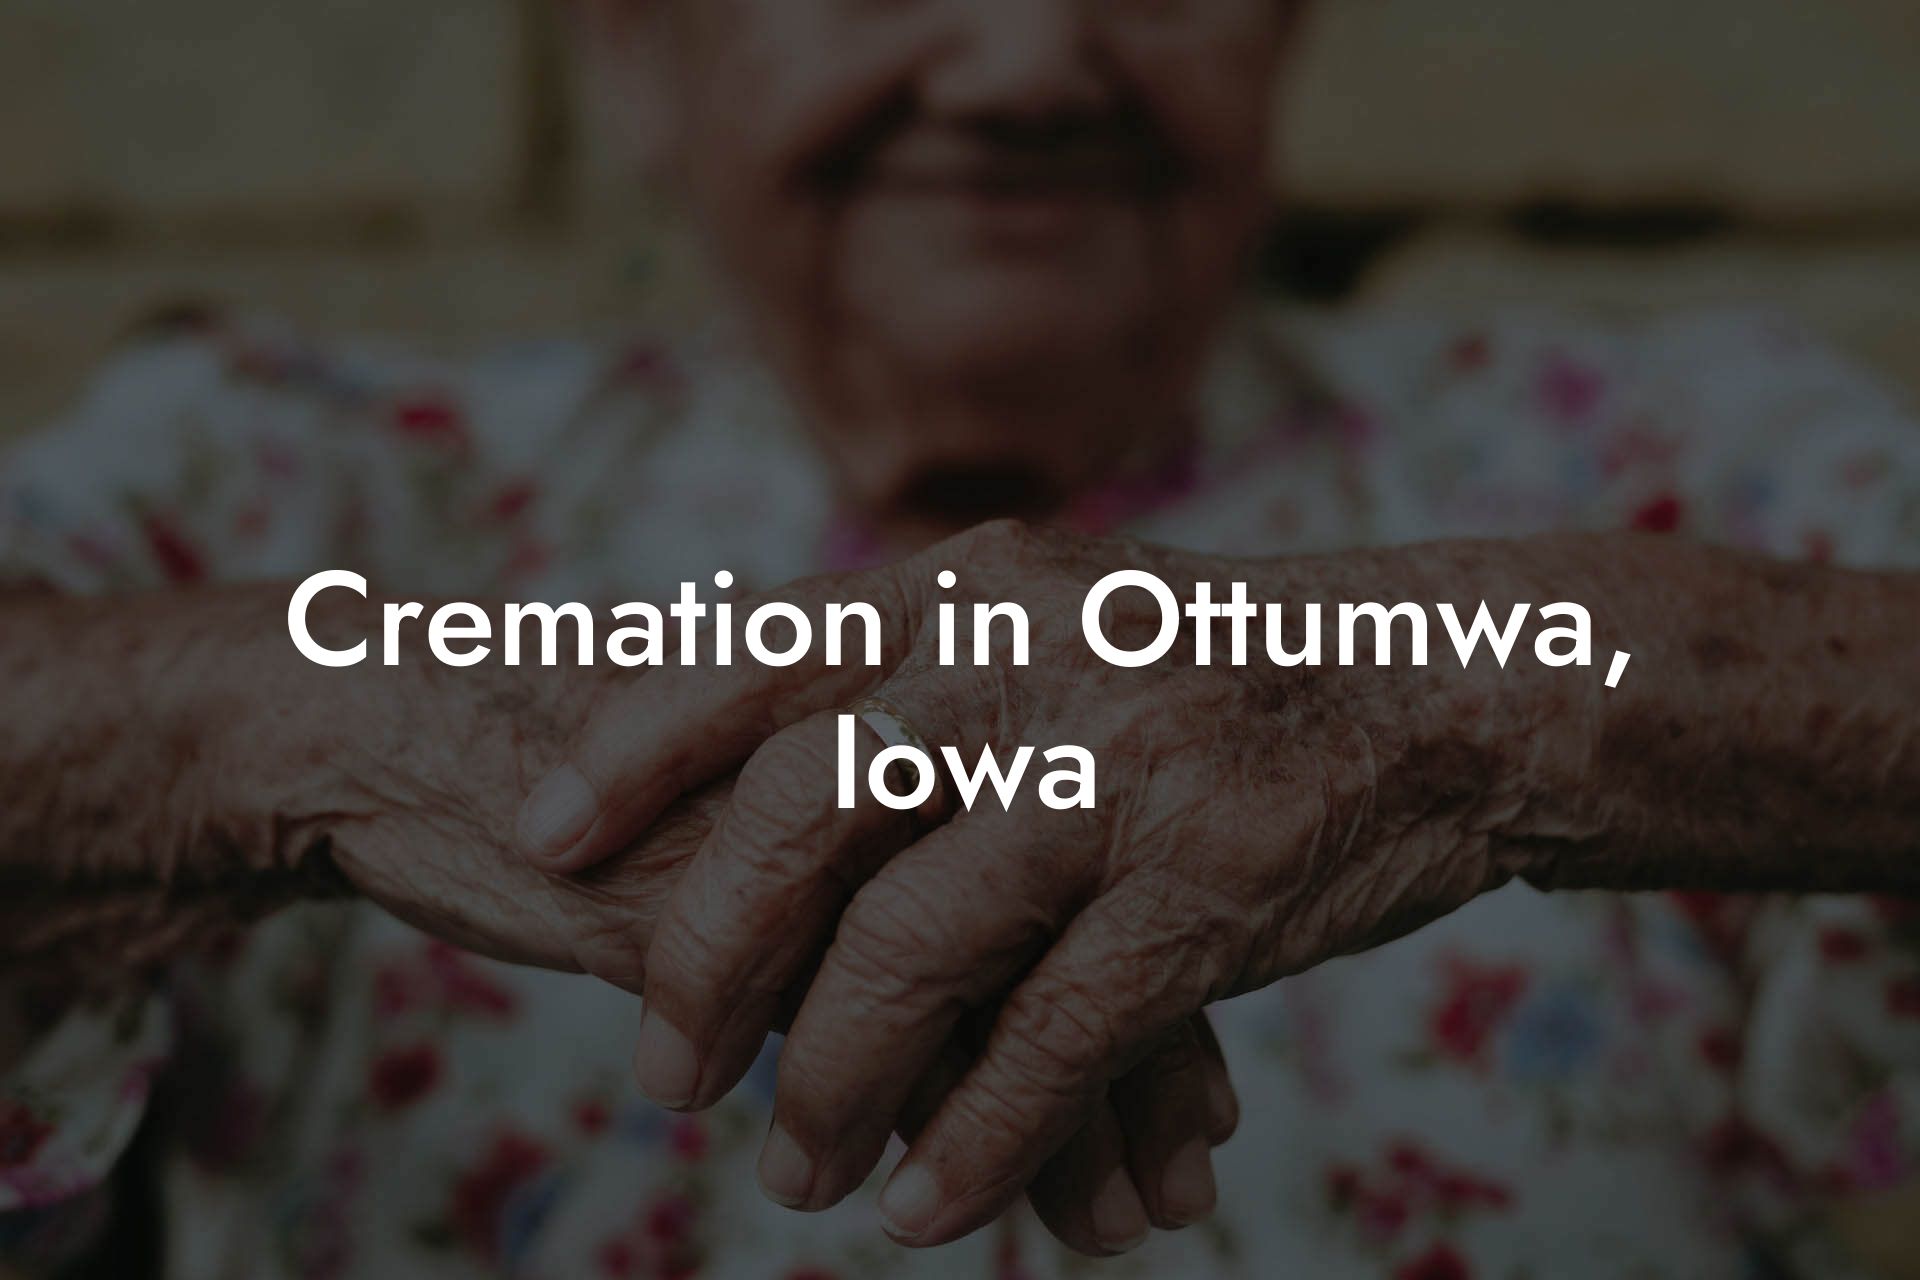 Cremation in Ottumwa, Iowa